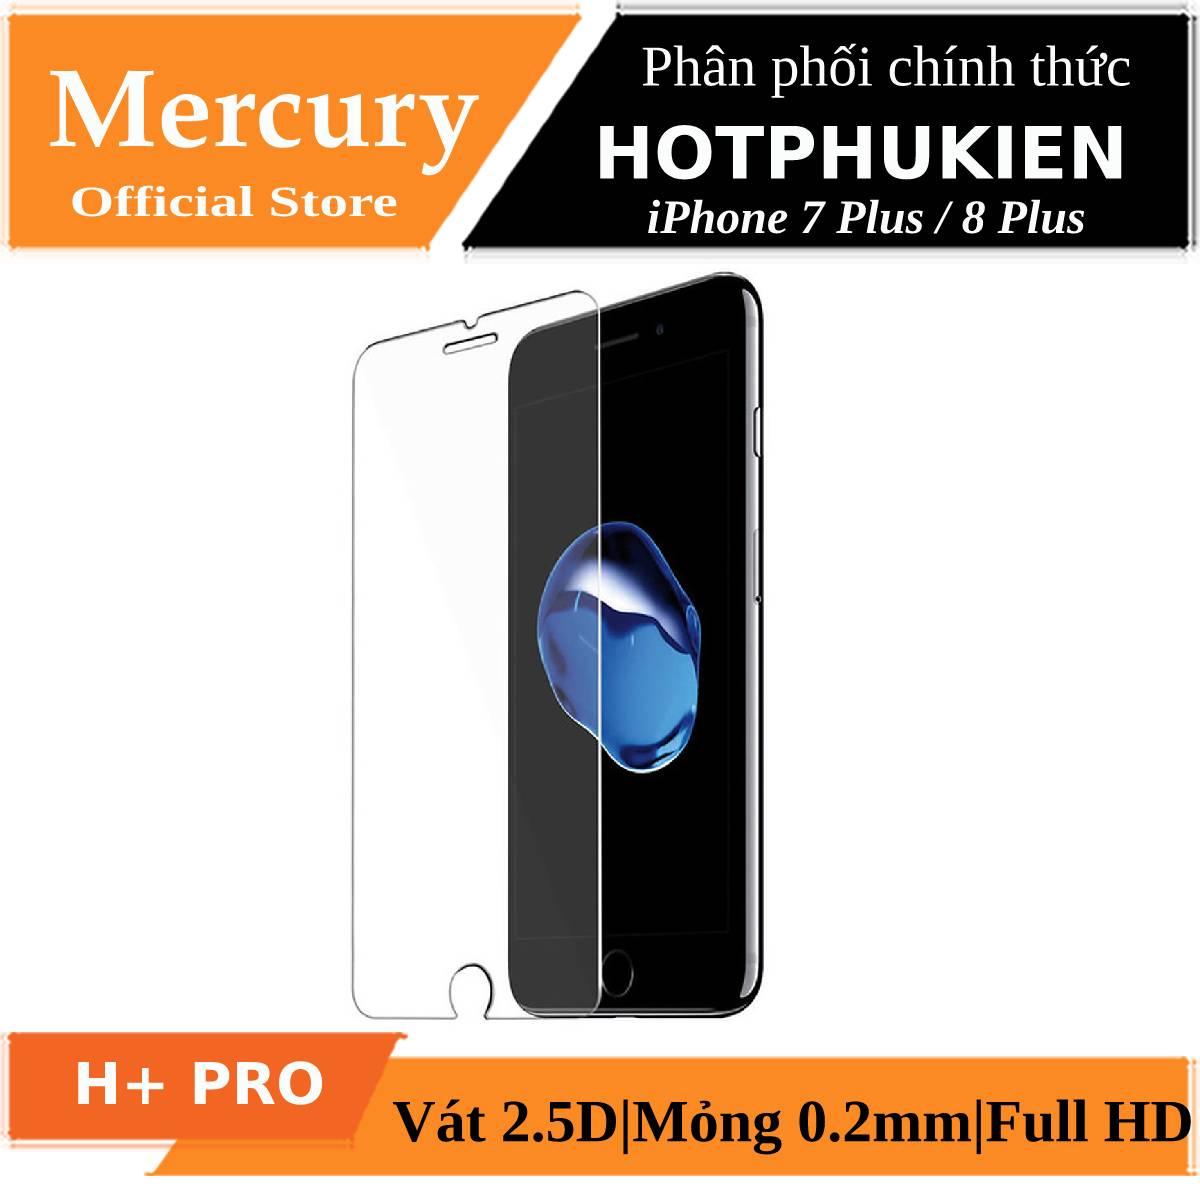 Miếng dán kính cường lực Mercury H+ Pro cho iPhone 7 Plus / iPhone 8 Plus